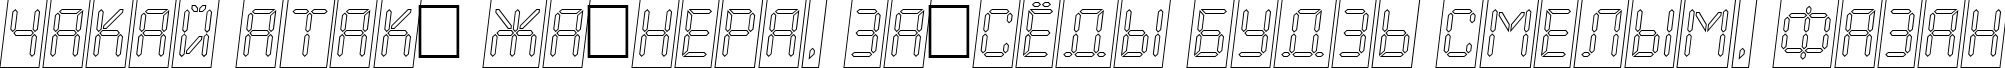 Пример написания шрифтом a_LCDNovaCmOtlObl текста на белорусском